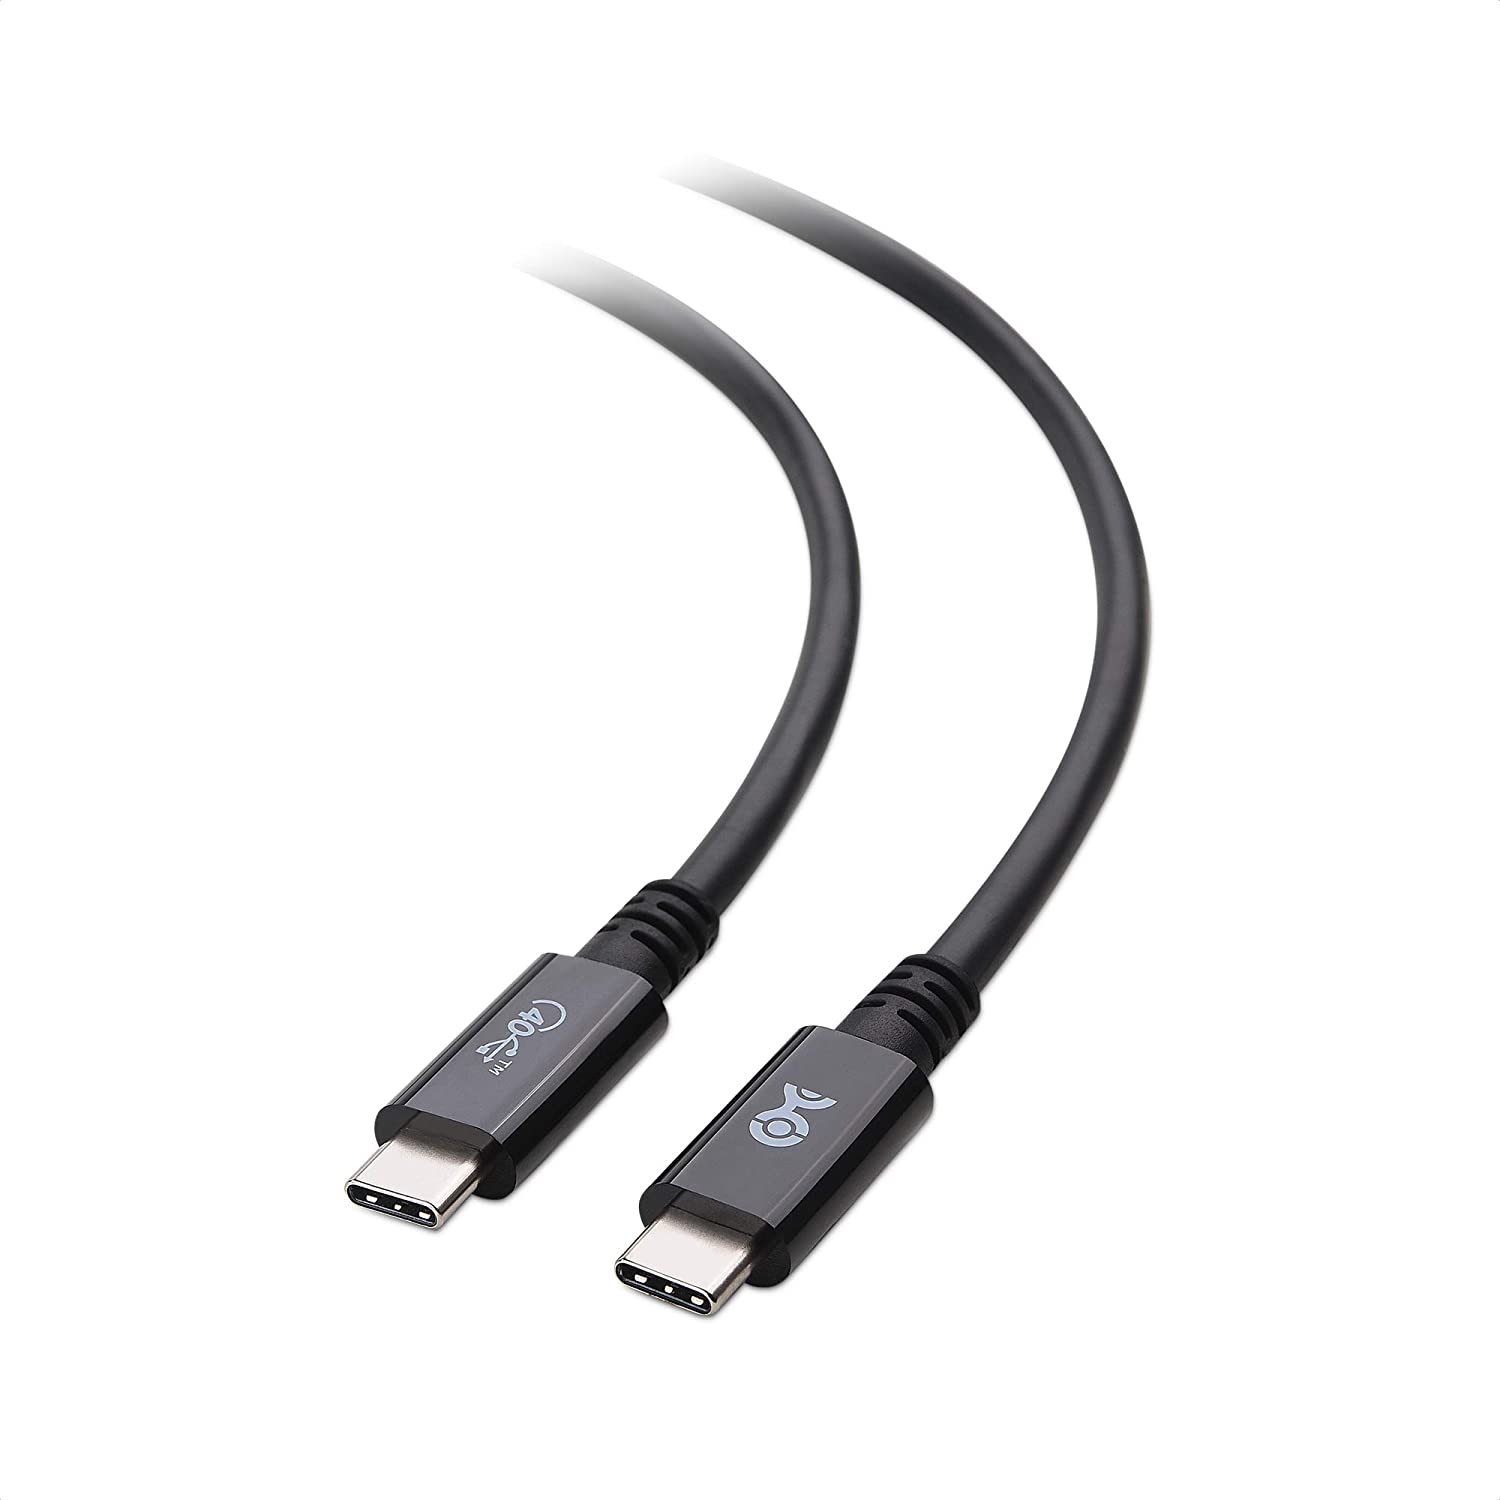 Cable Matters USB4 USB-C-kabel van 2.6 meter lang